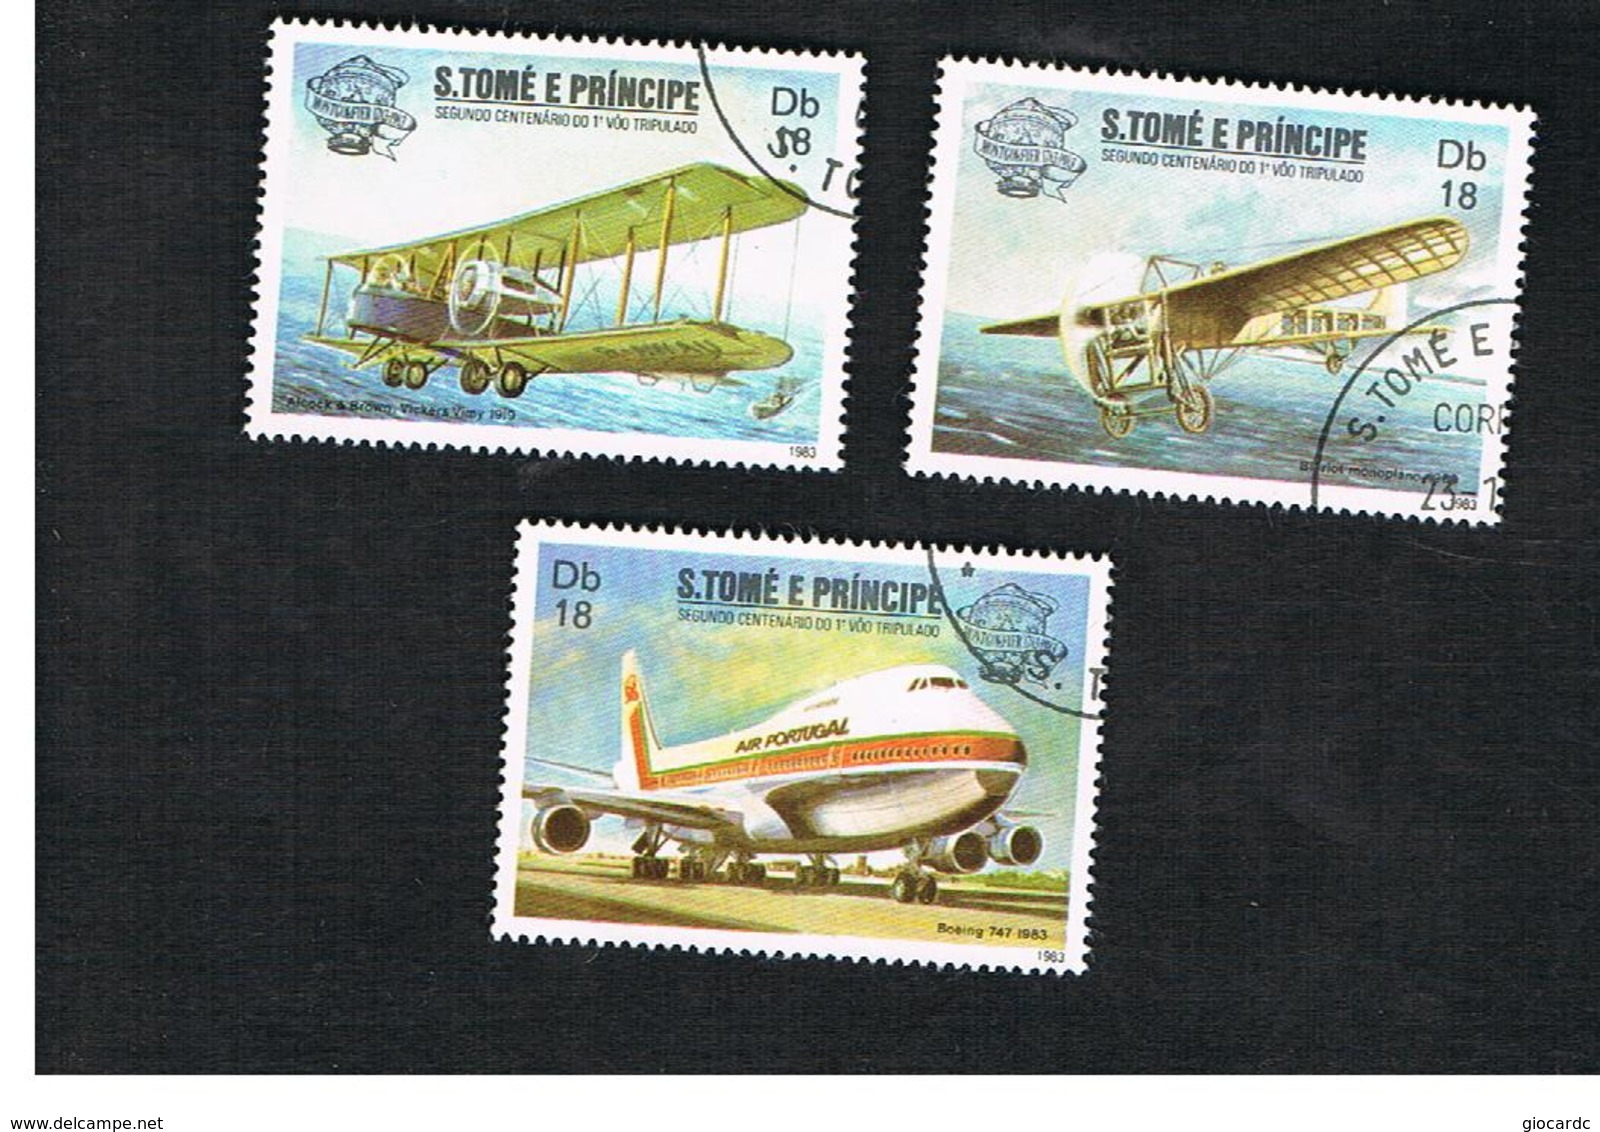 SAO TOME' E PRINCIPE (ST. THOMAS AND PRINCE) - MI 831A.833A - 1983 FIRST MANNED FLIGHT BICENTENARY - USED - Sao Tomé E Principe